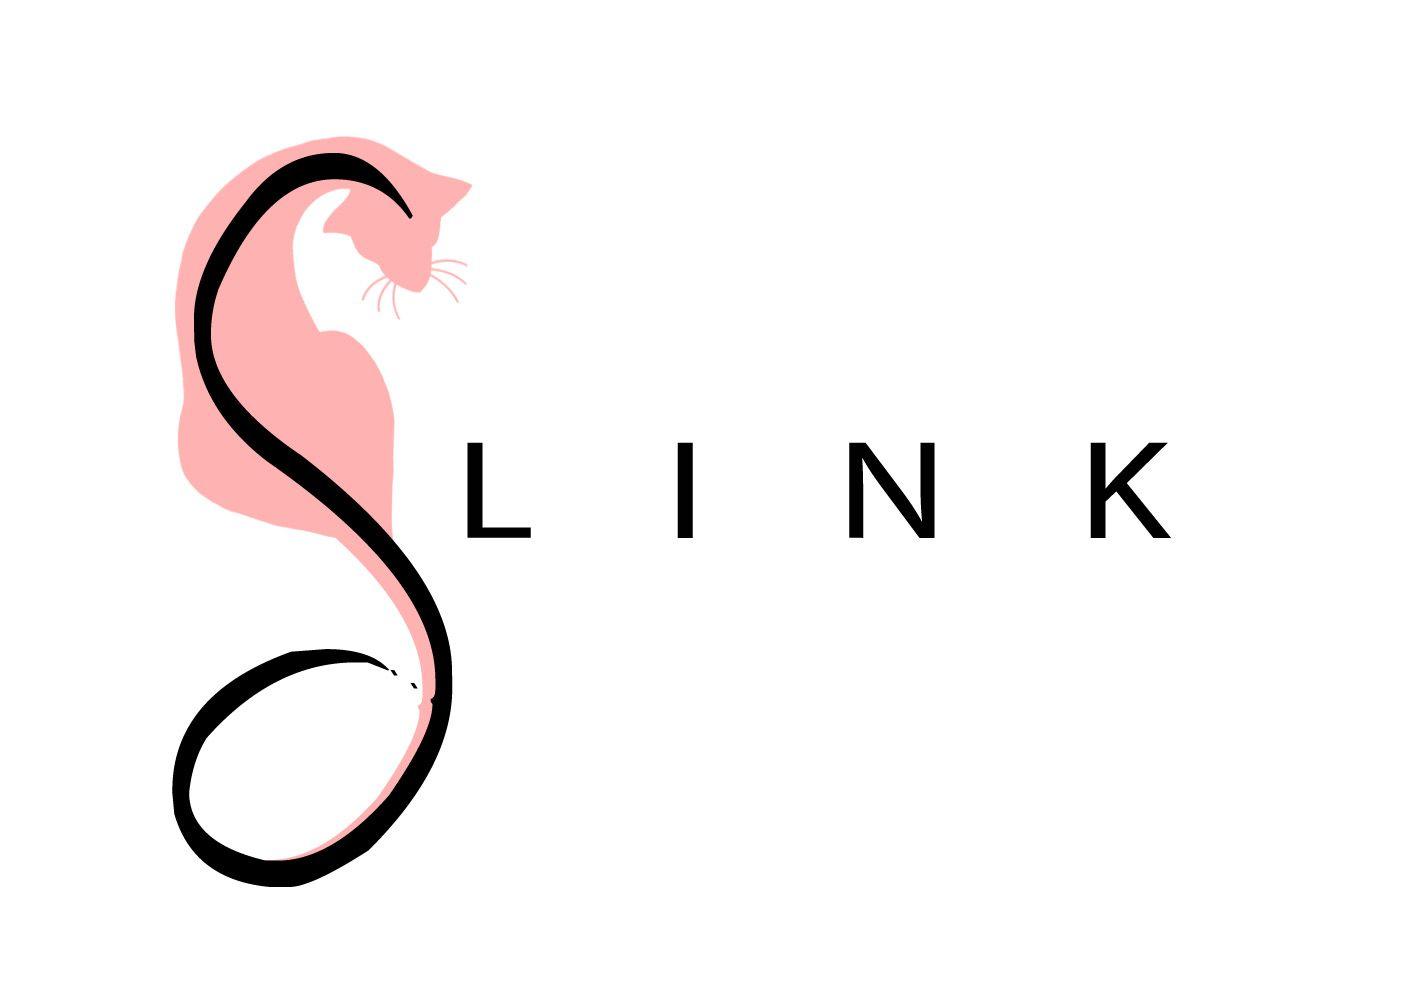 Slink Logo - Logo idea 4